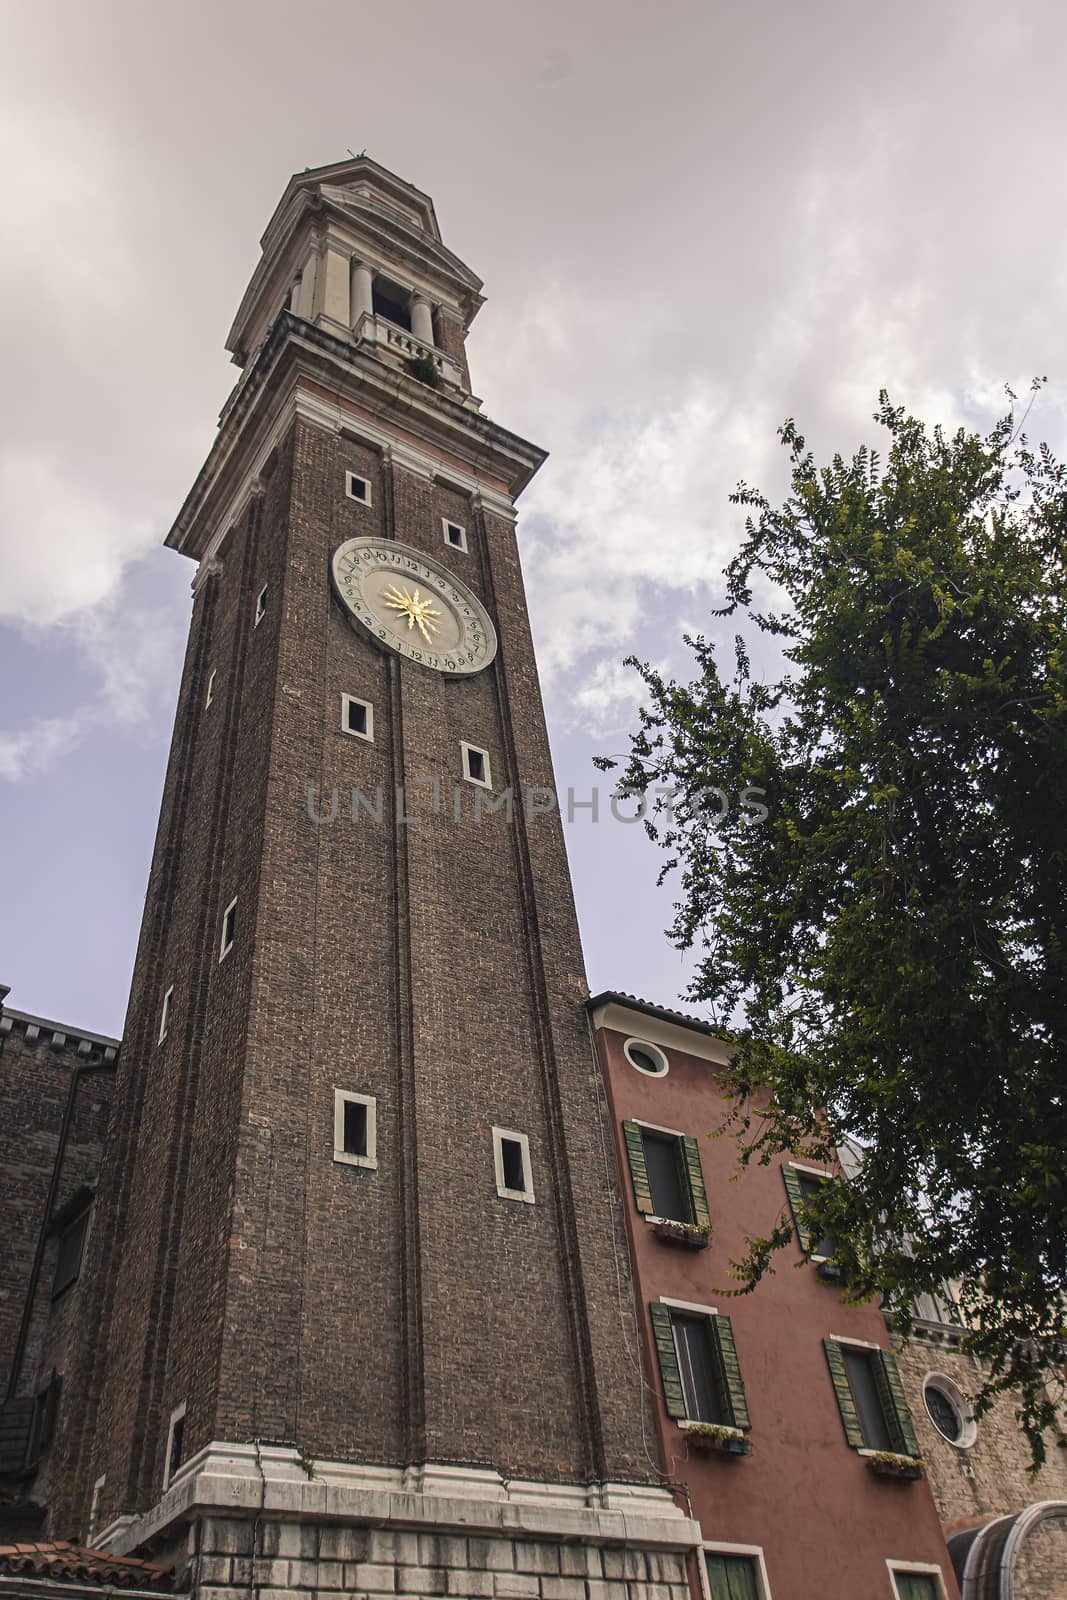 Santi Apostoli bell tower in Venice 2 by pippocarlot